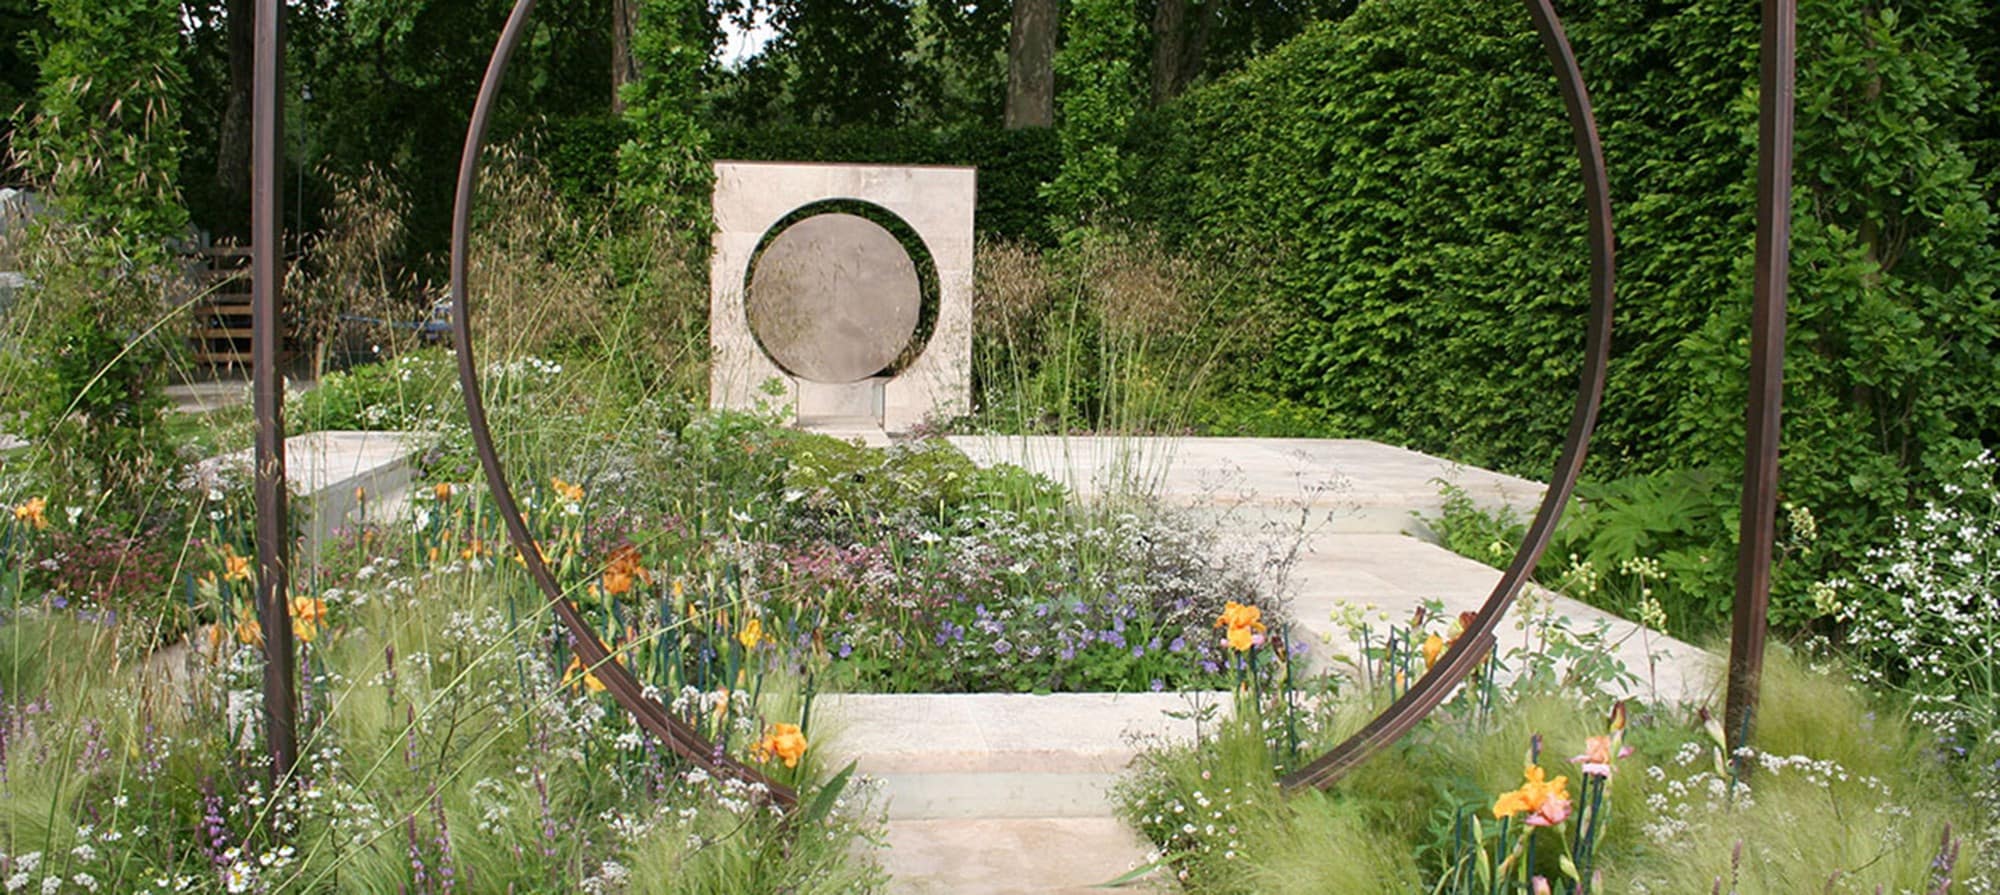 The Laurent-Perrier Garden designed by Jinny Blom